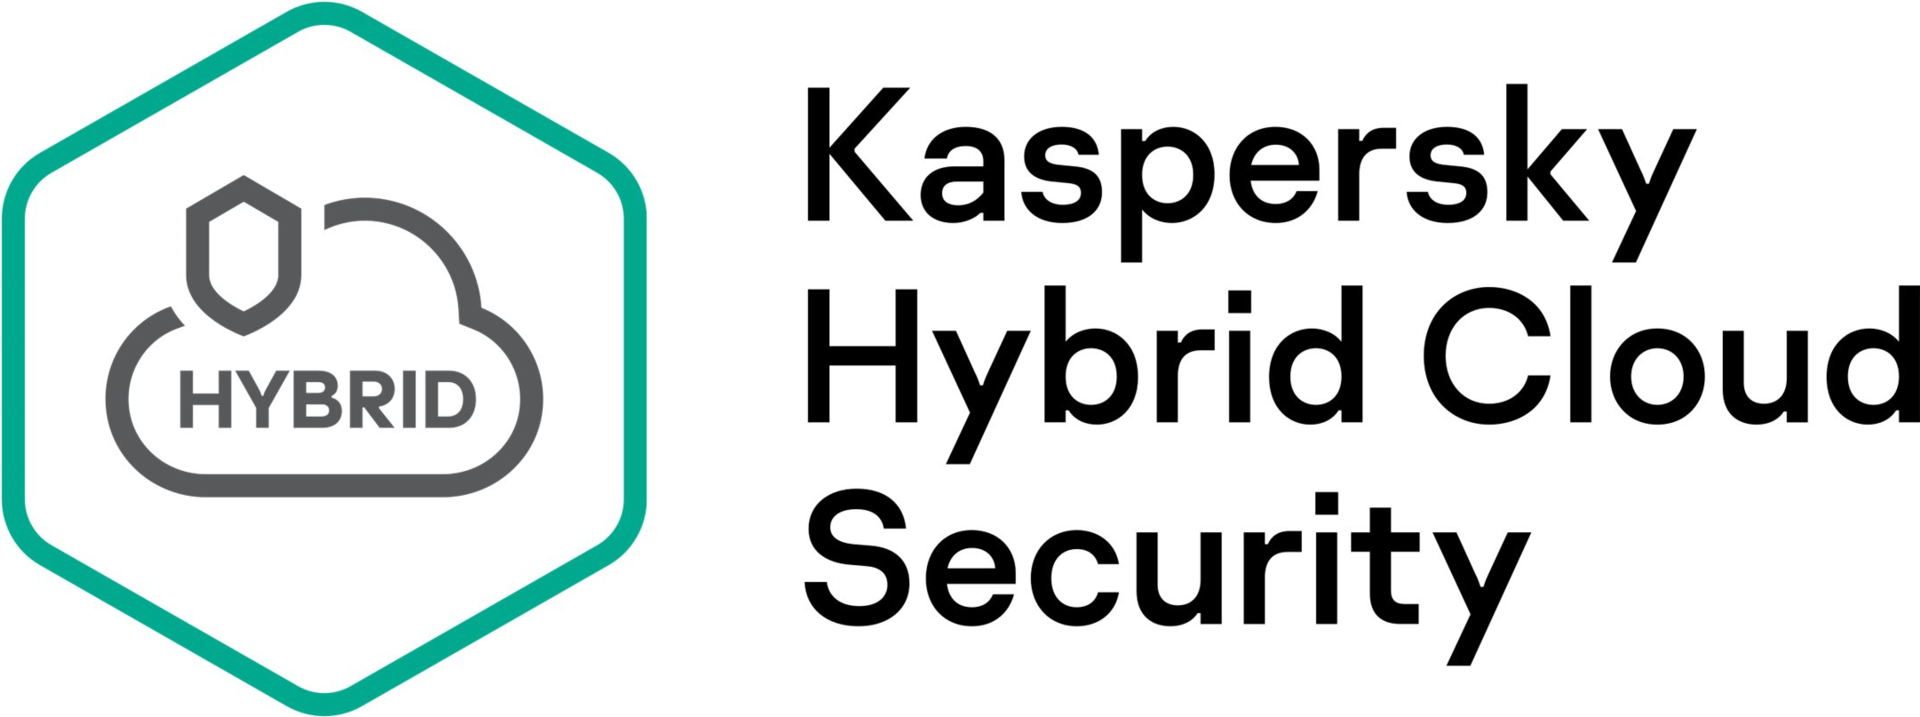 Kaspersky Hybrid Cloud Security (KL4554XART9)